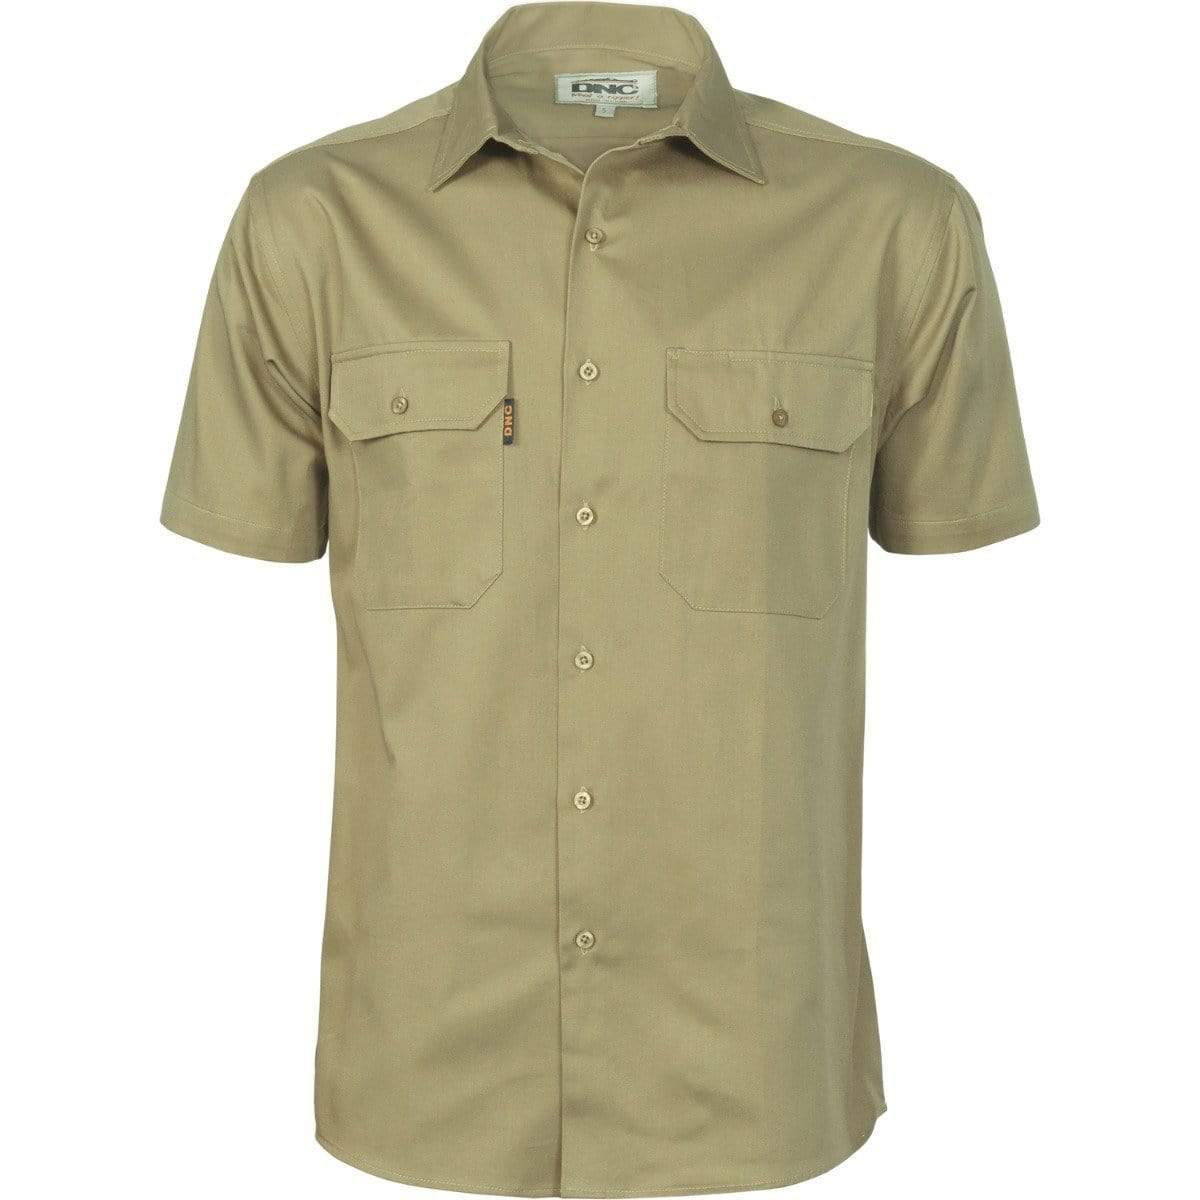 Dnc Workwear Cotton Drill Short Sleeve Work Shirt - 3201 Work Wear DNC Workwear Khaki XS 